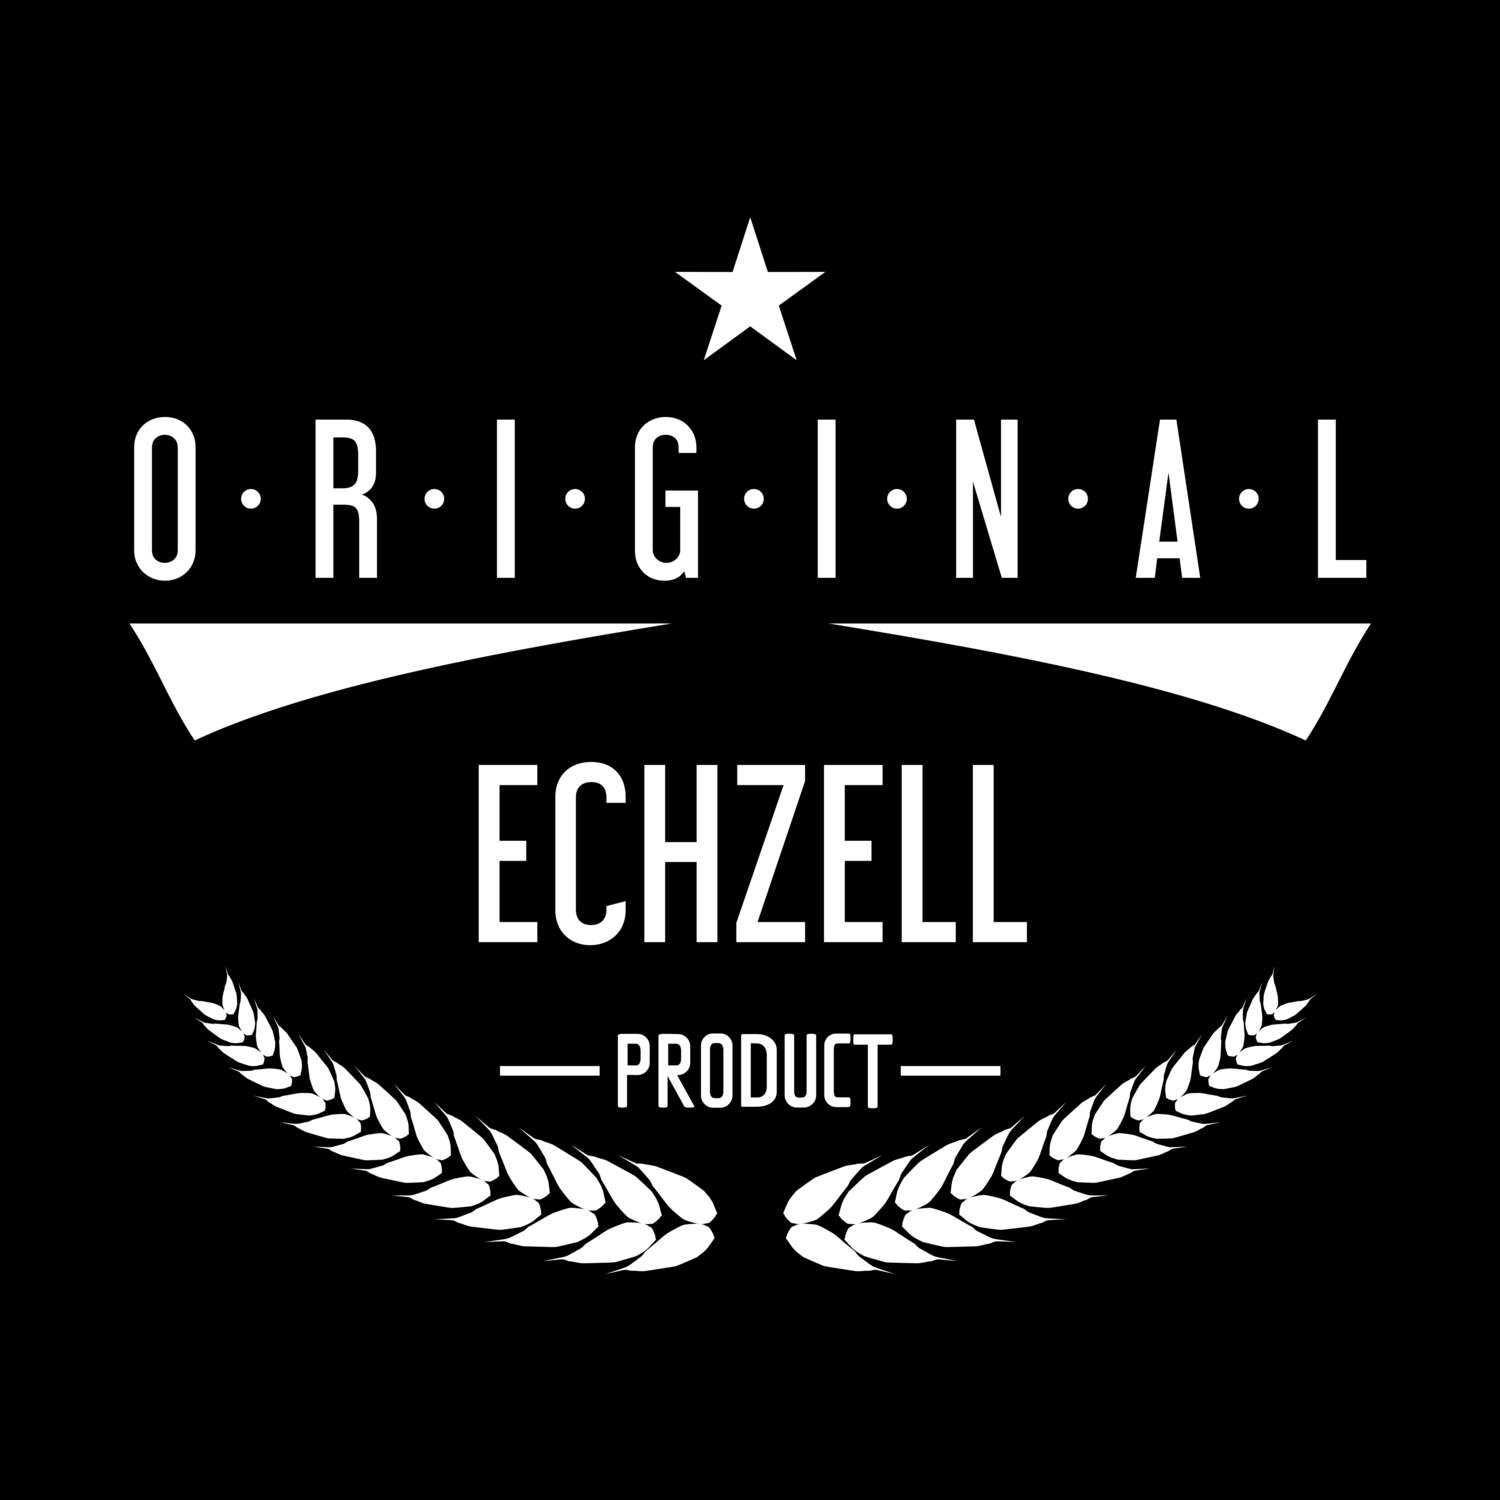 Echzell T-Shirt »Original Product«